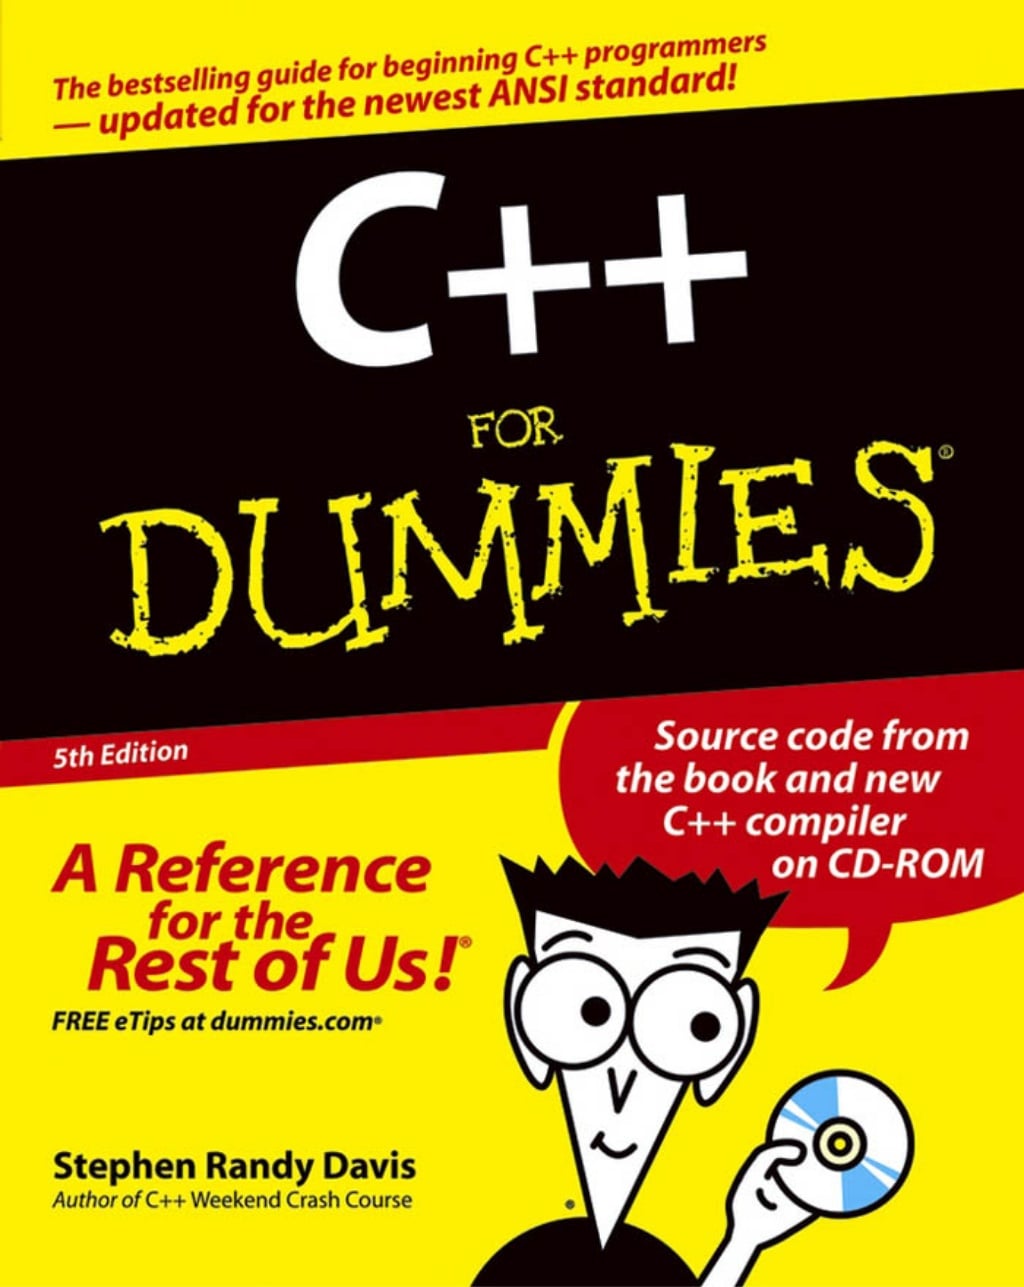 C++ for Dummies 5 Edición Stephen Randy Davis PDF